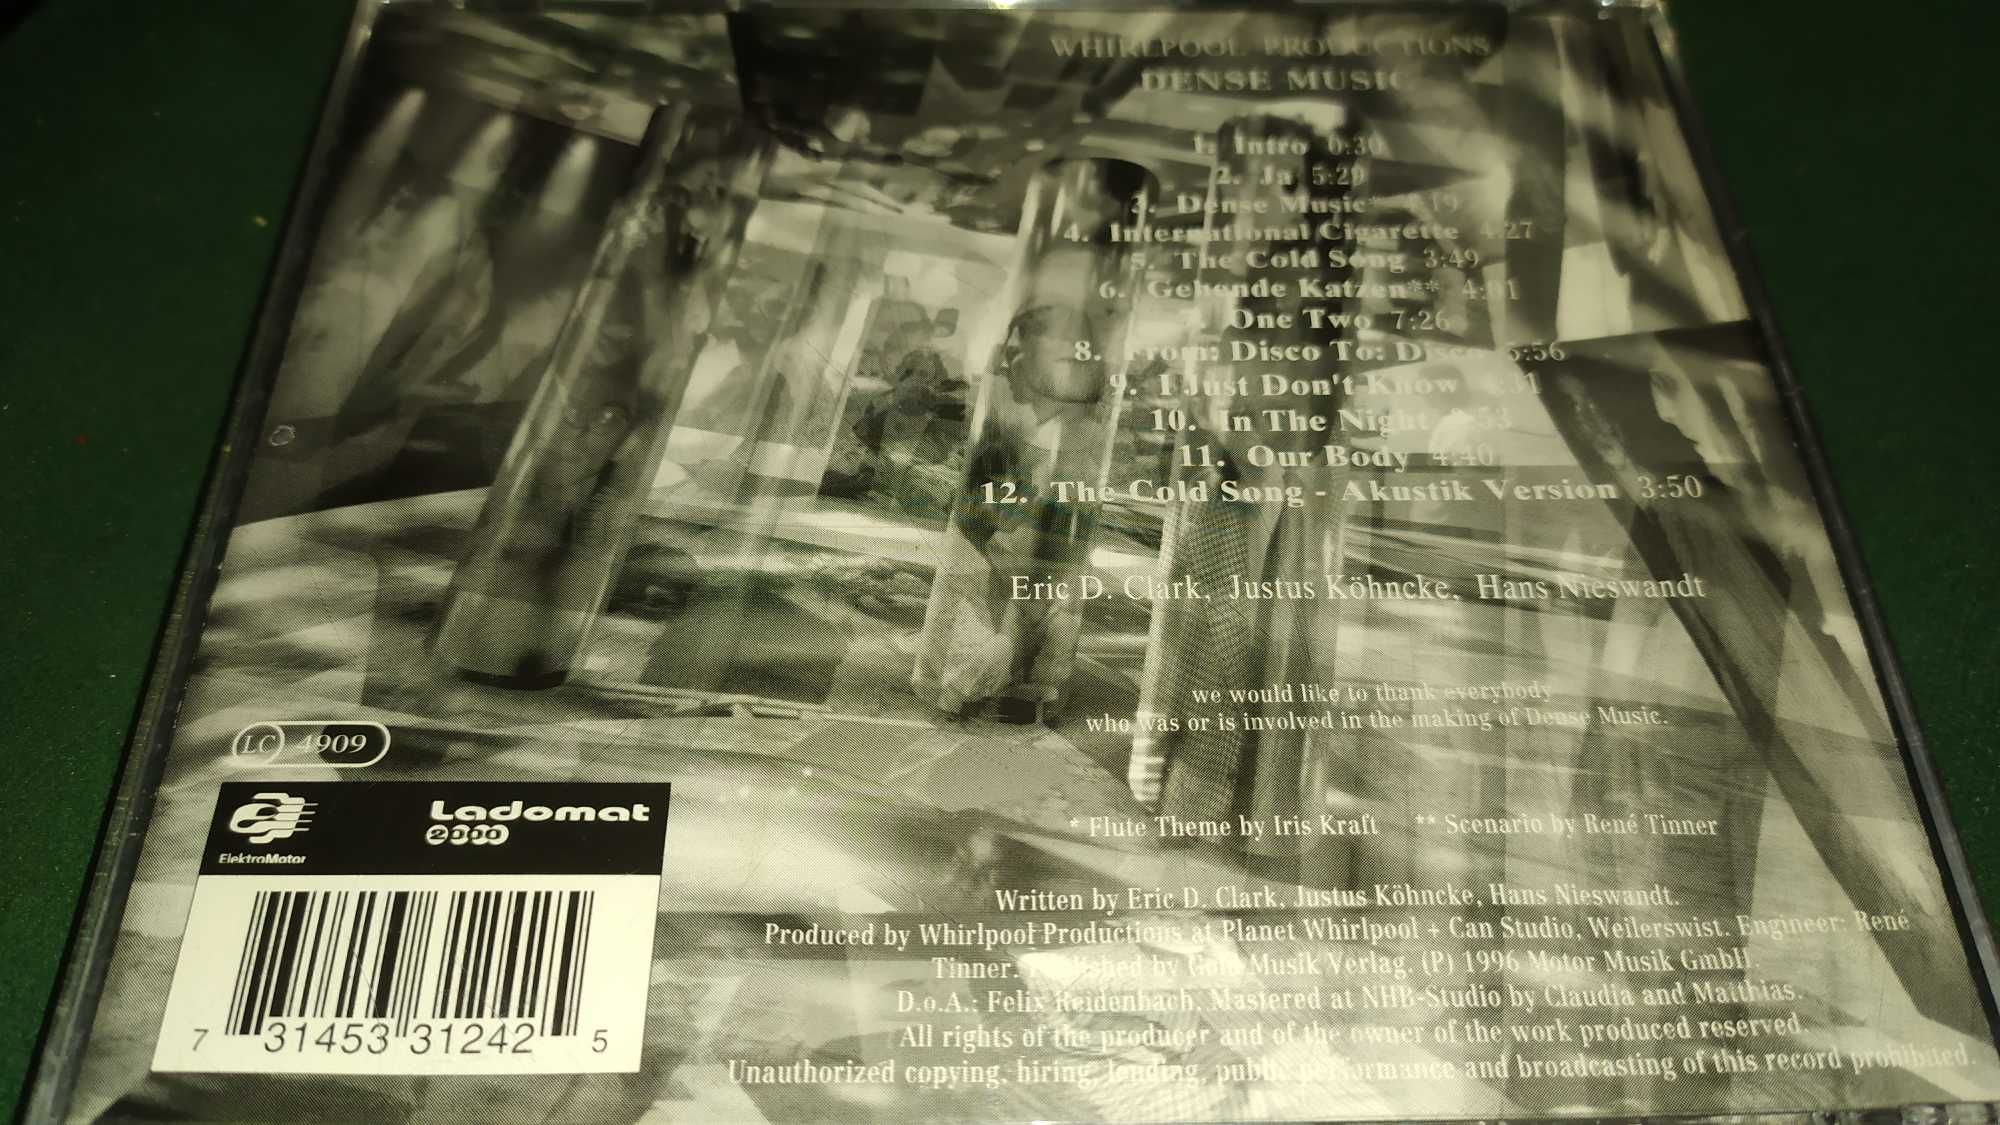 Whirlpool Productions - Dense Music cd album